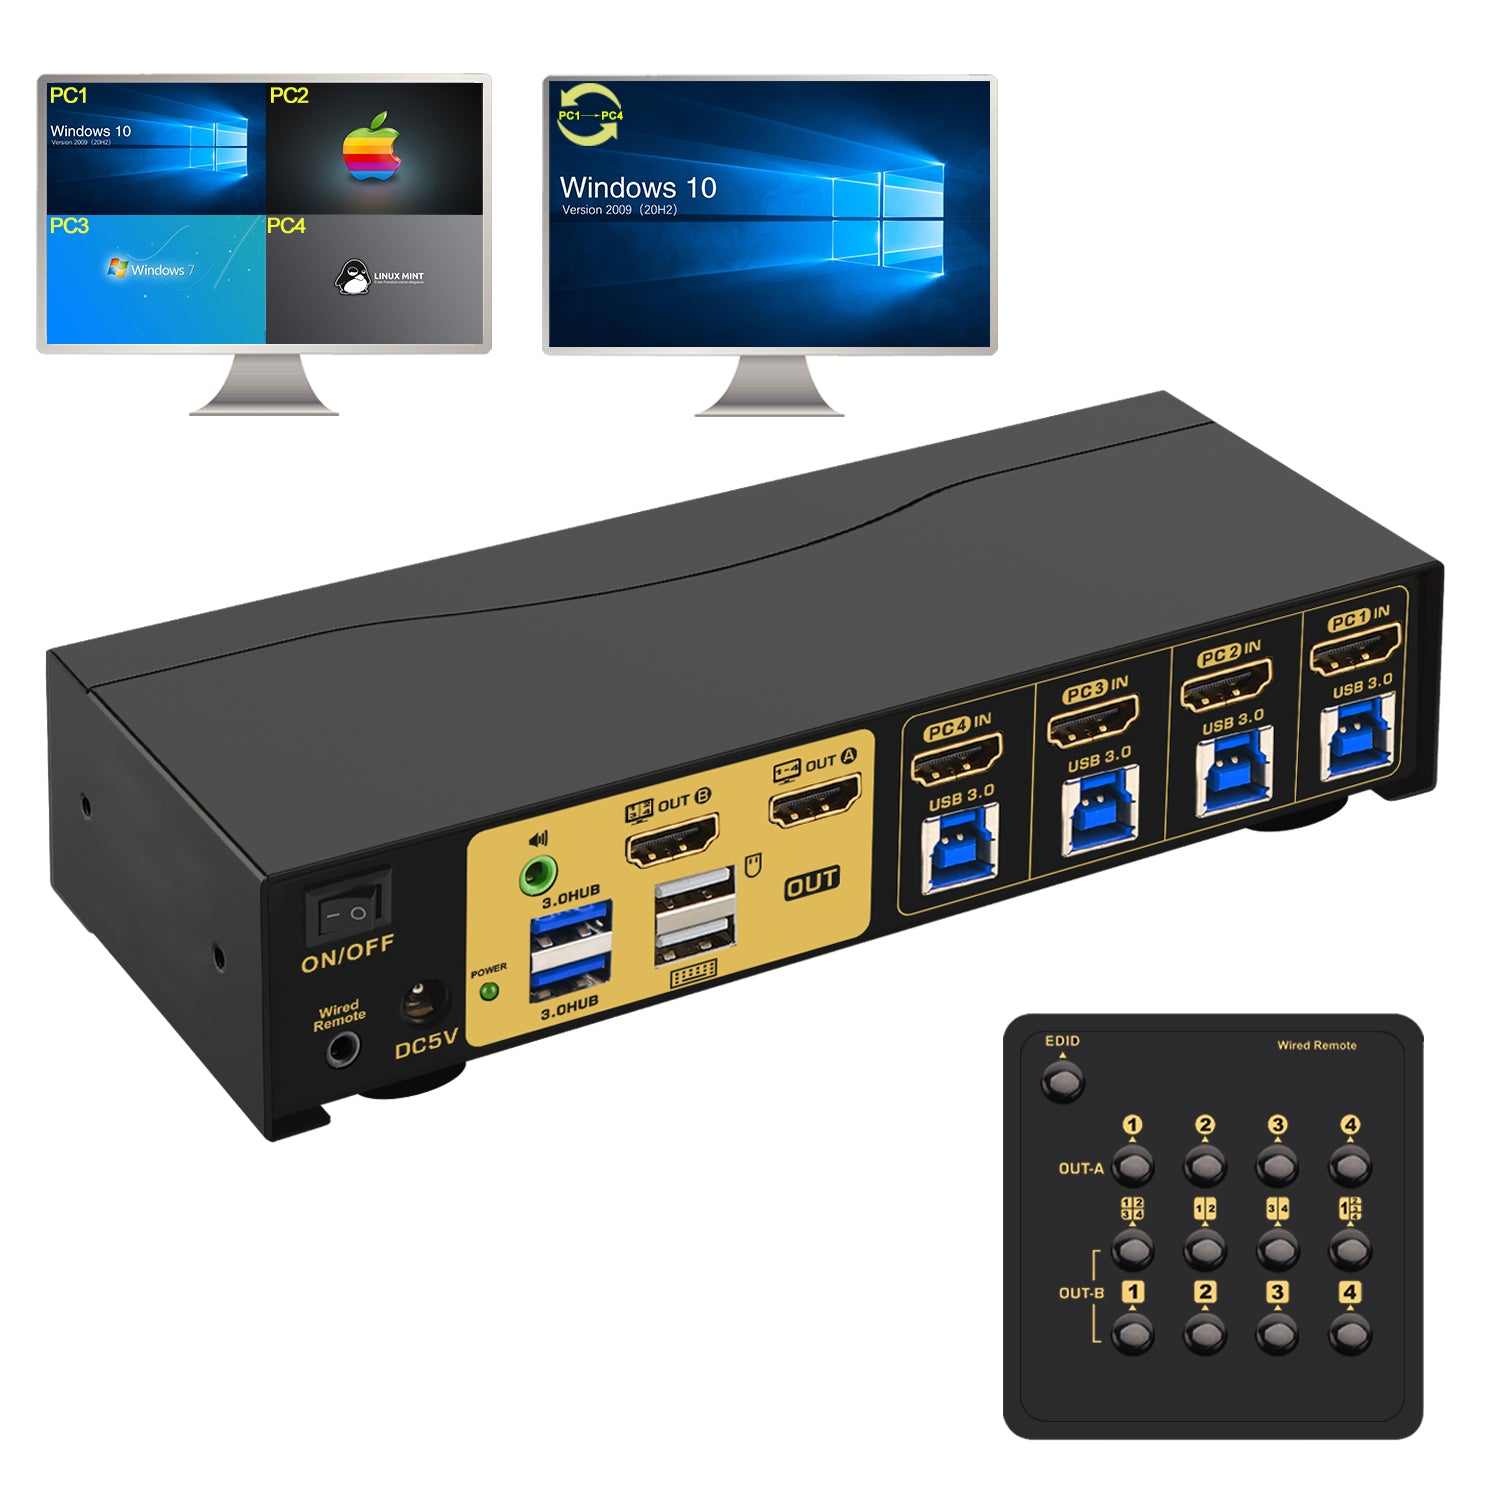 CKL USB 3.0 Multi-View HDMI KVM Switch 4K@30Hz for 4 Computers 2 Monitors, Supports Quad + Single View, Matrix, PIP and Versatile Display Options, CKL-42MVKVM